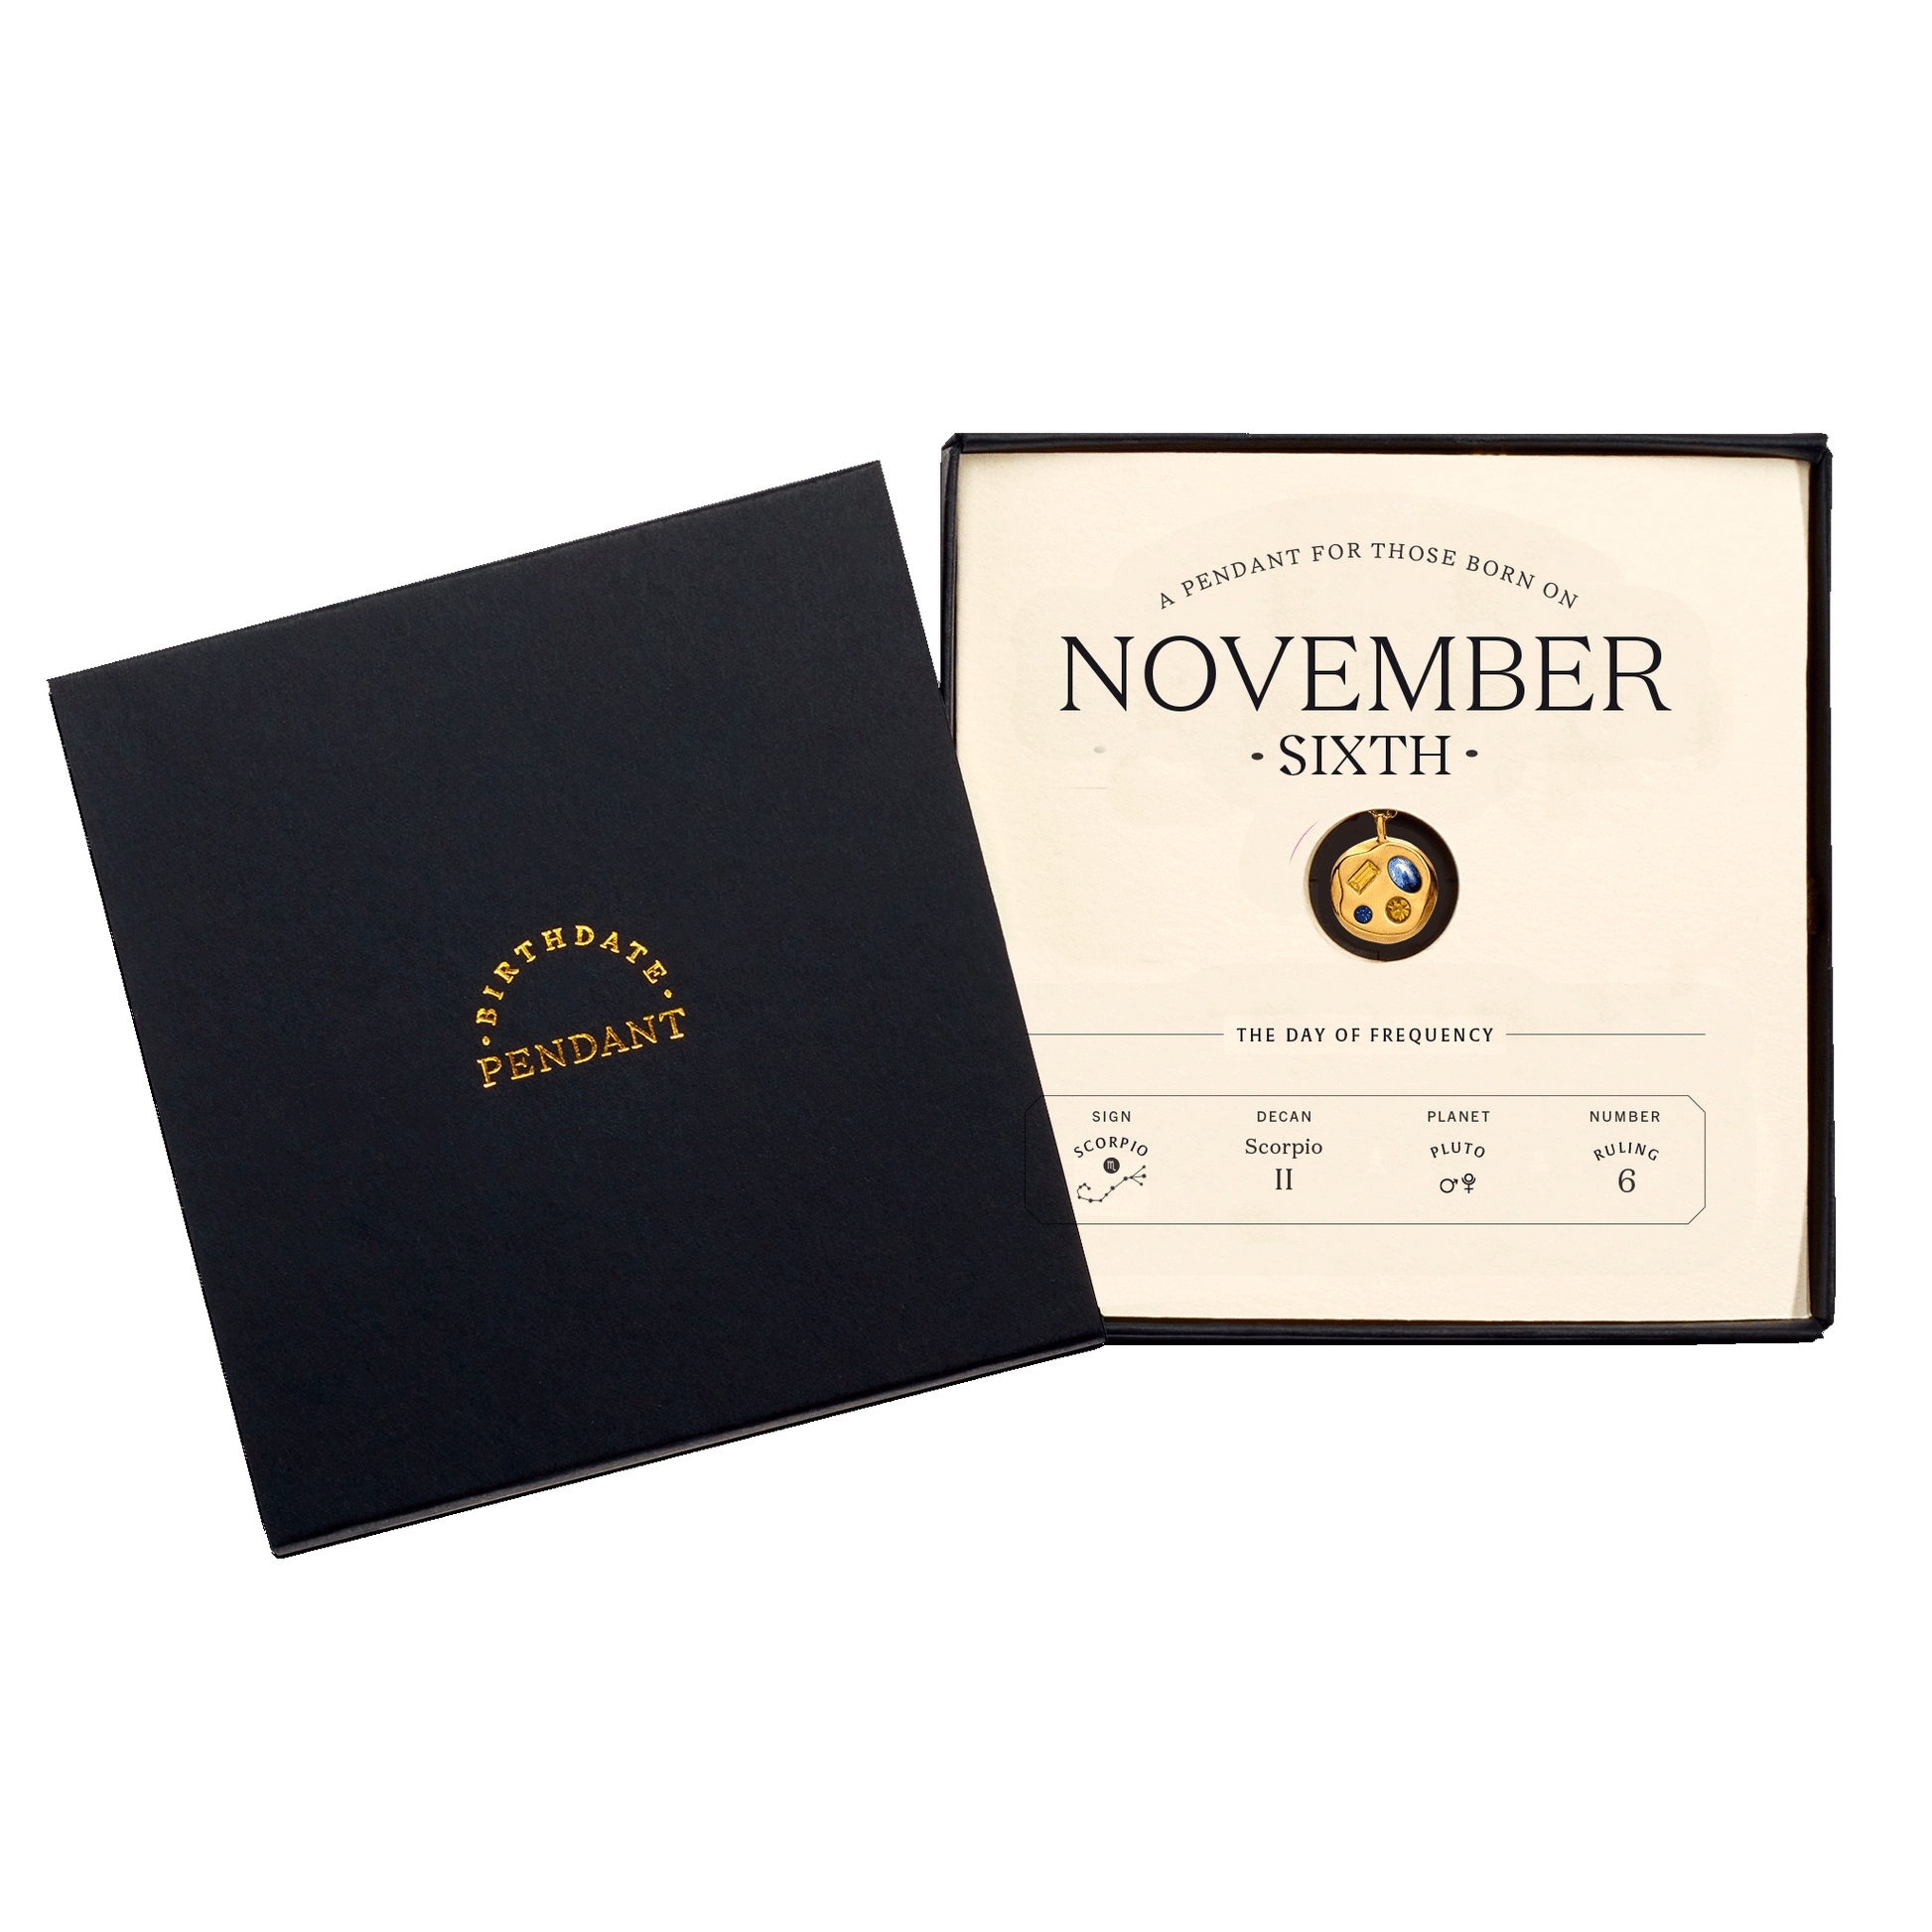 The November Sixth Pendant inside its box